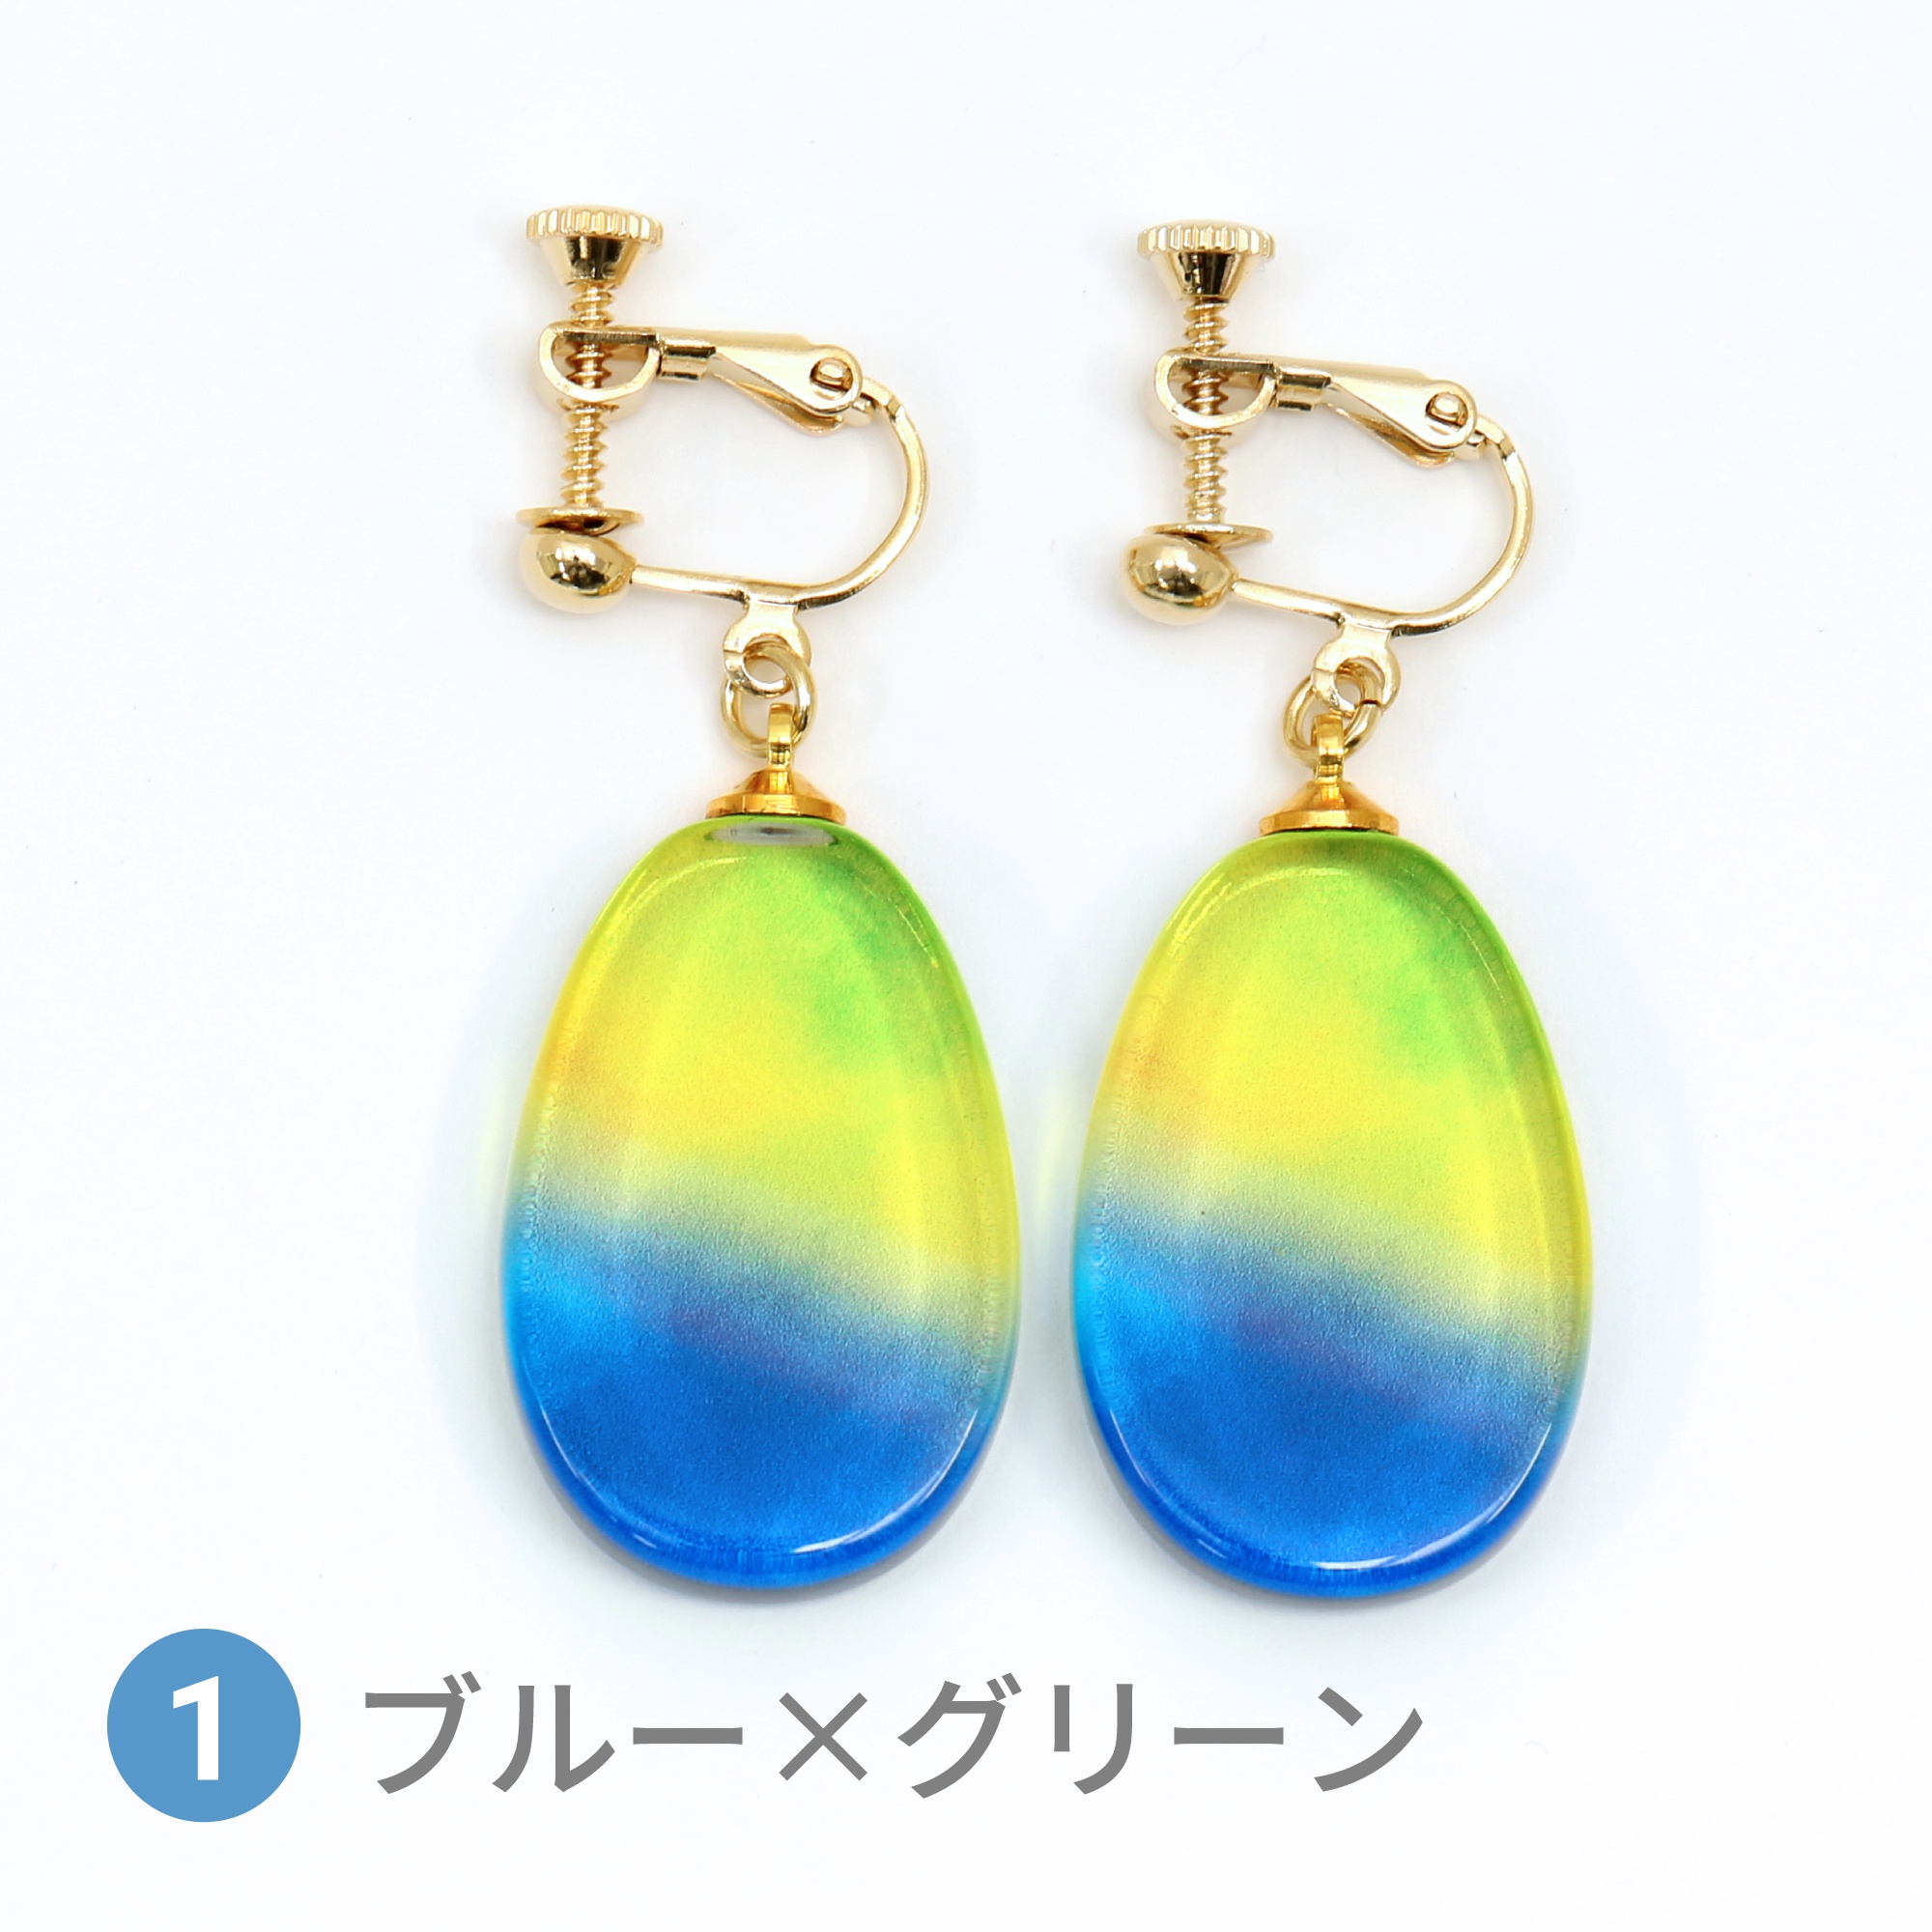 Glass accessories Earring AURORA blue & green drop shape